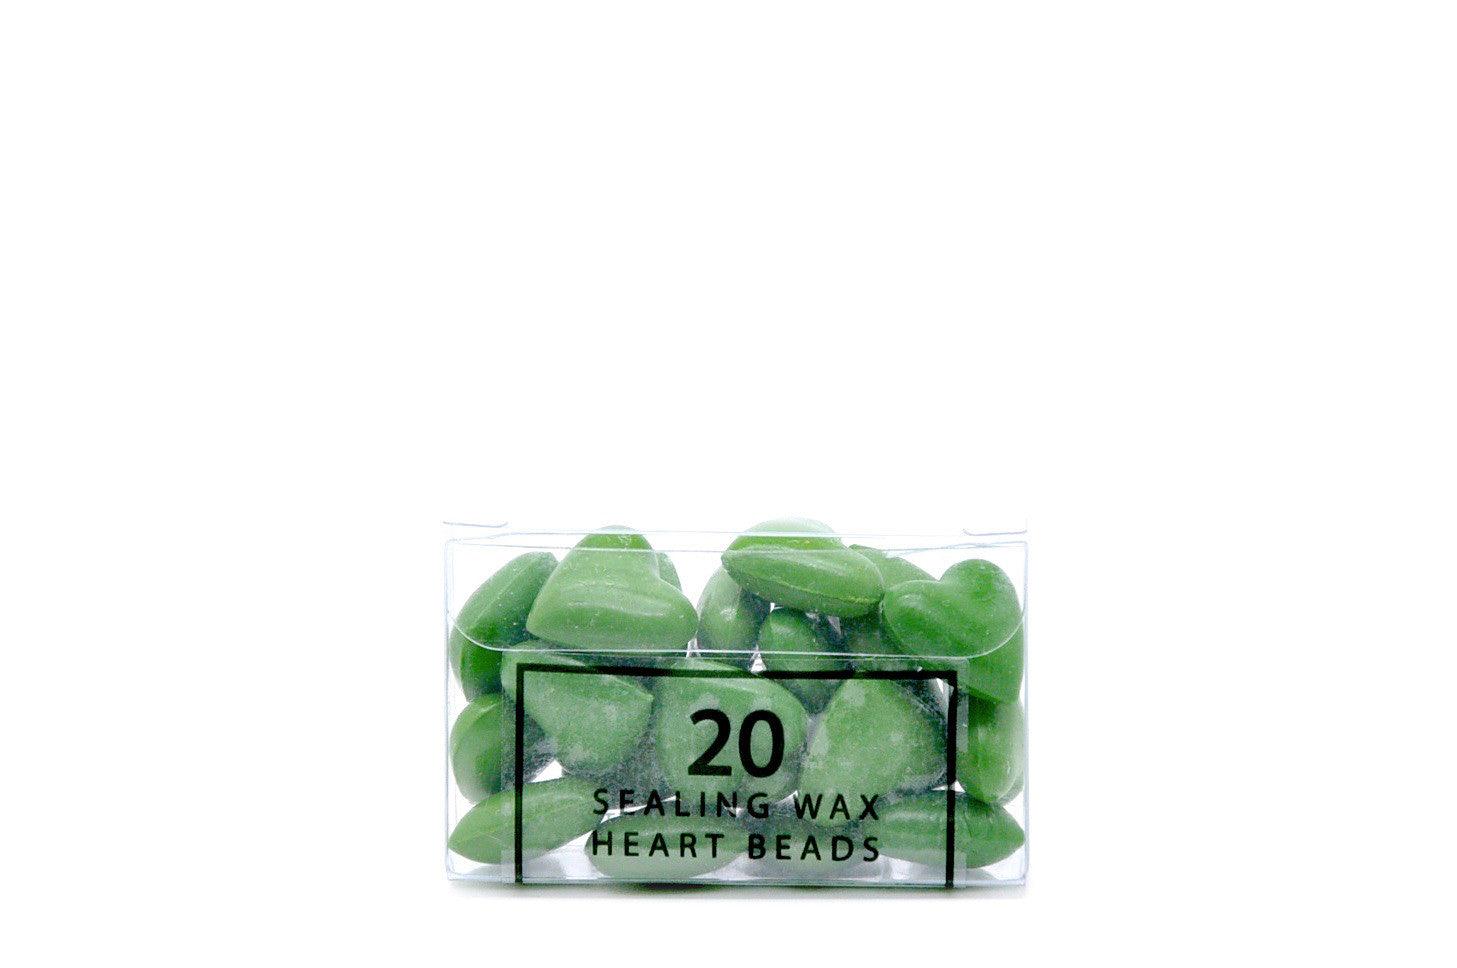 Grass Green Sealing Wax Heart Bead - Backtozero B20 - Grass Green, Heart Bead, Heart Wax, sale, Sealing Wax, Wax Bead